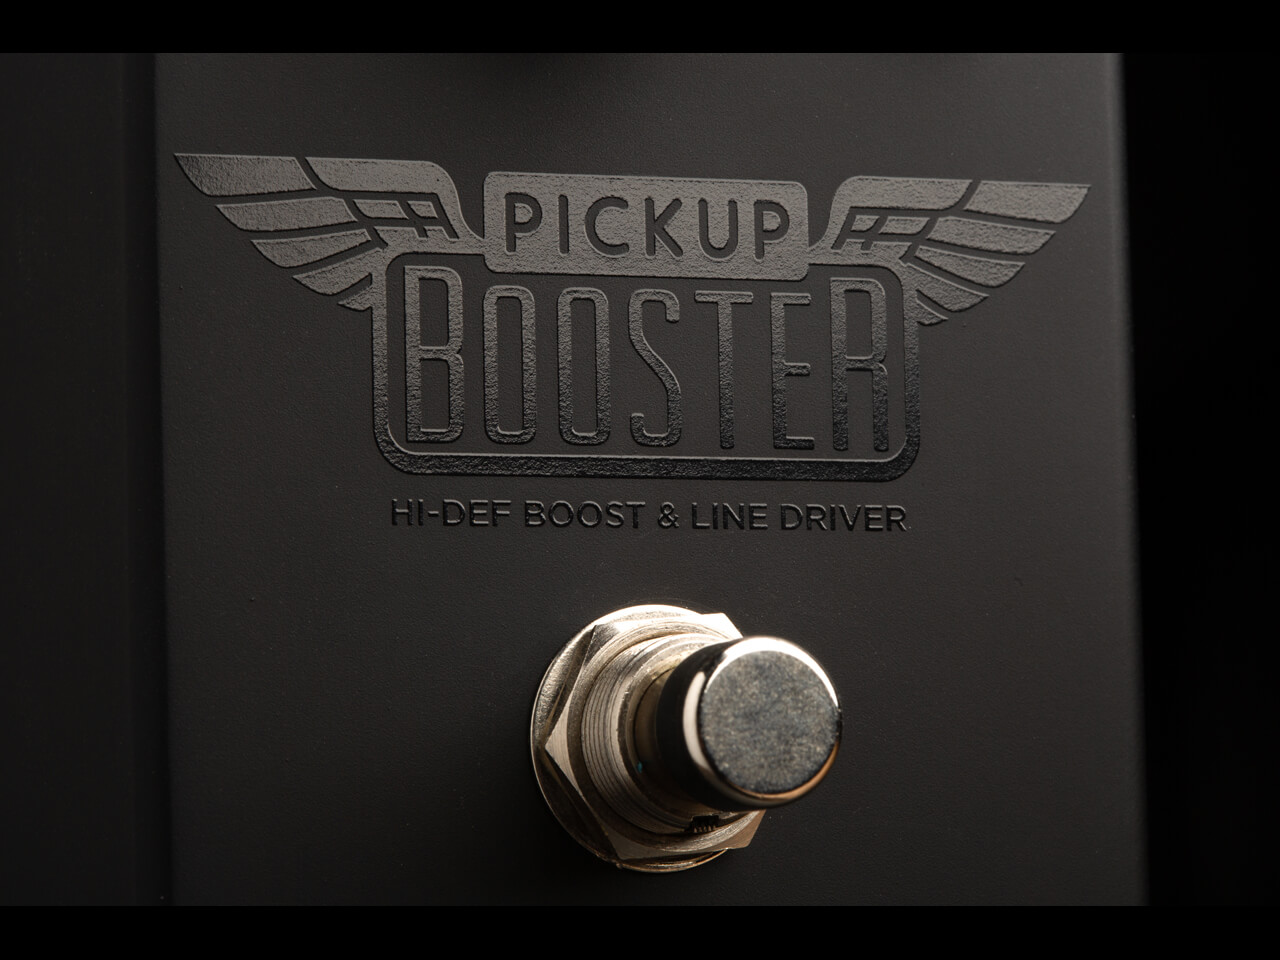 Seymour Duncan Pickup Booster™ Hi-Def Boost & Line Driver<br>(ブースター)(セイモアダンカン) 駅前店